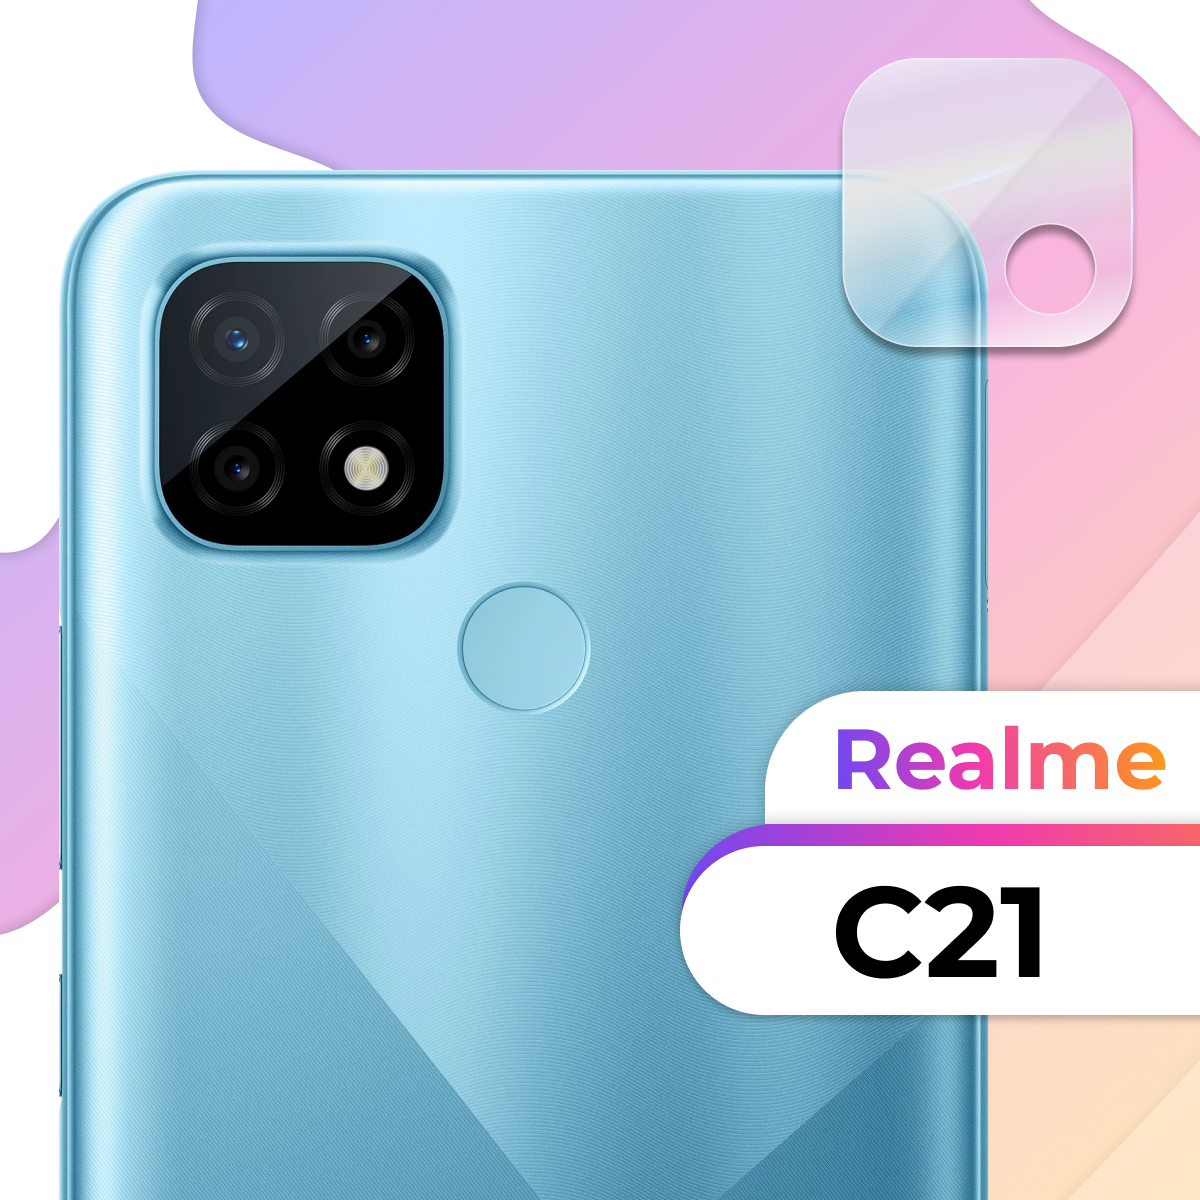 Защитное противоударное стекло на камеру смартфона Realme C21 / Прозрачное противоударное стекло для камеры телефона Реалми С21